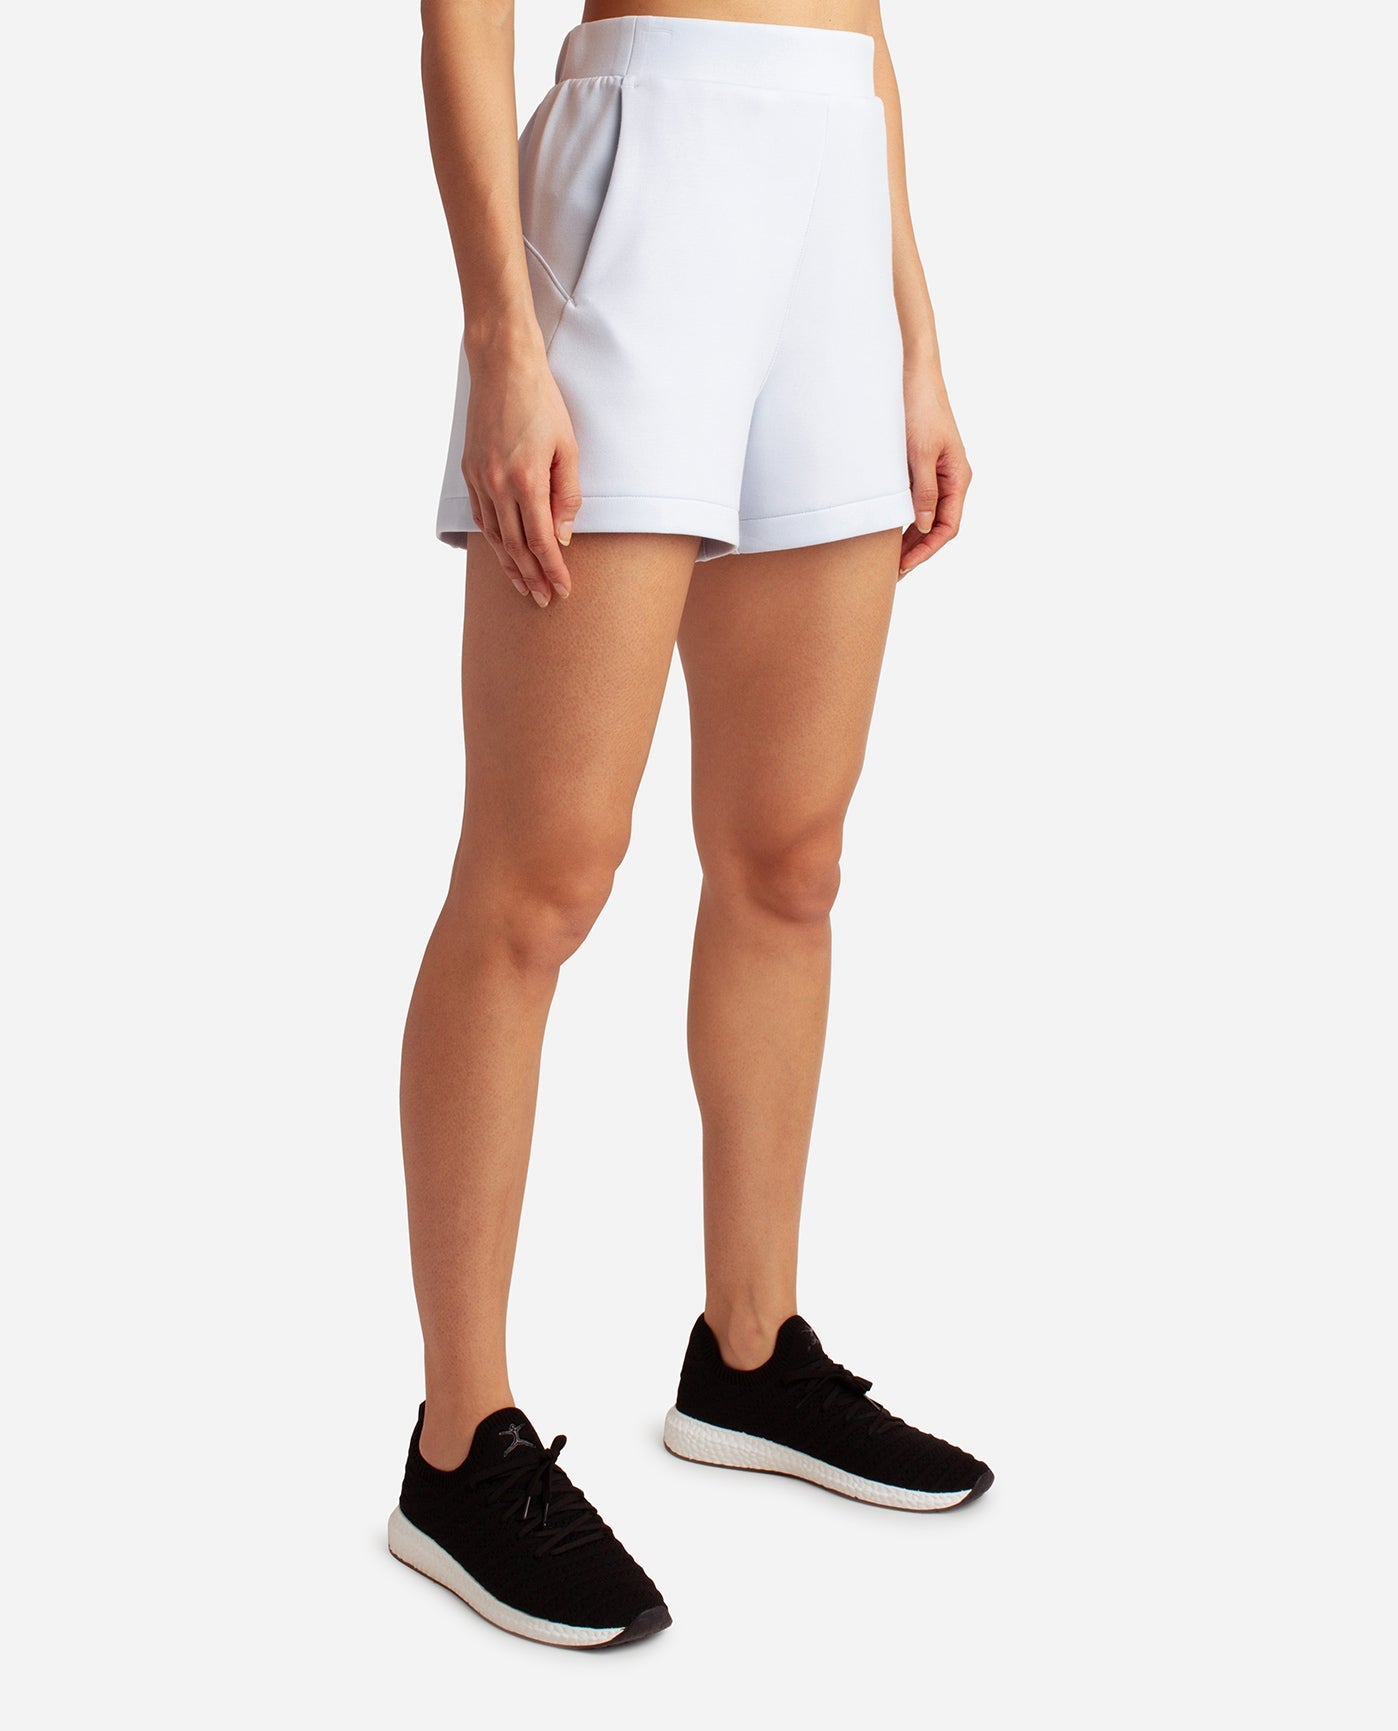 Women's Scuba Short, Shorts